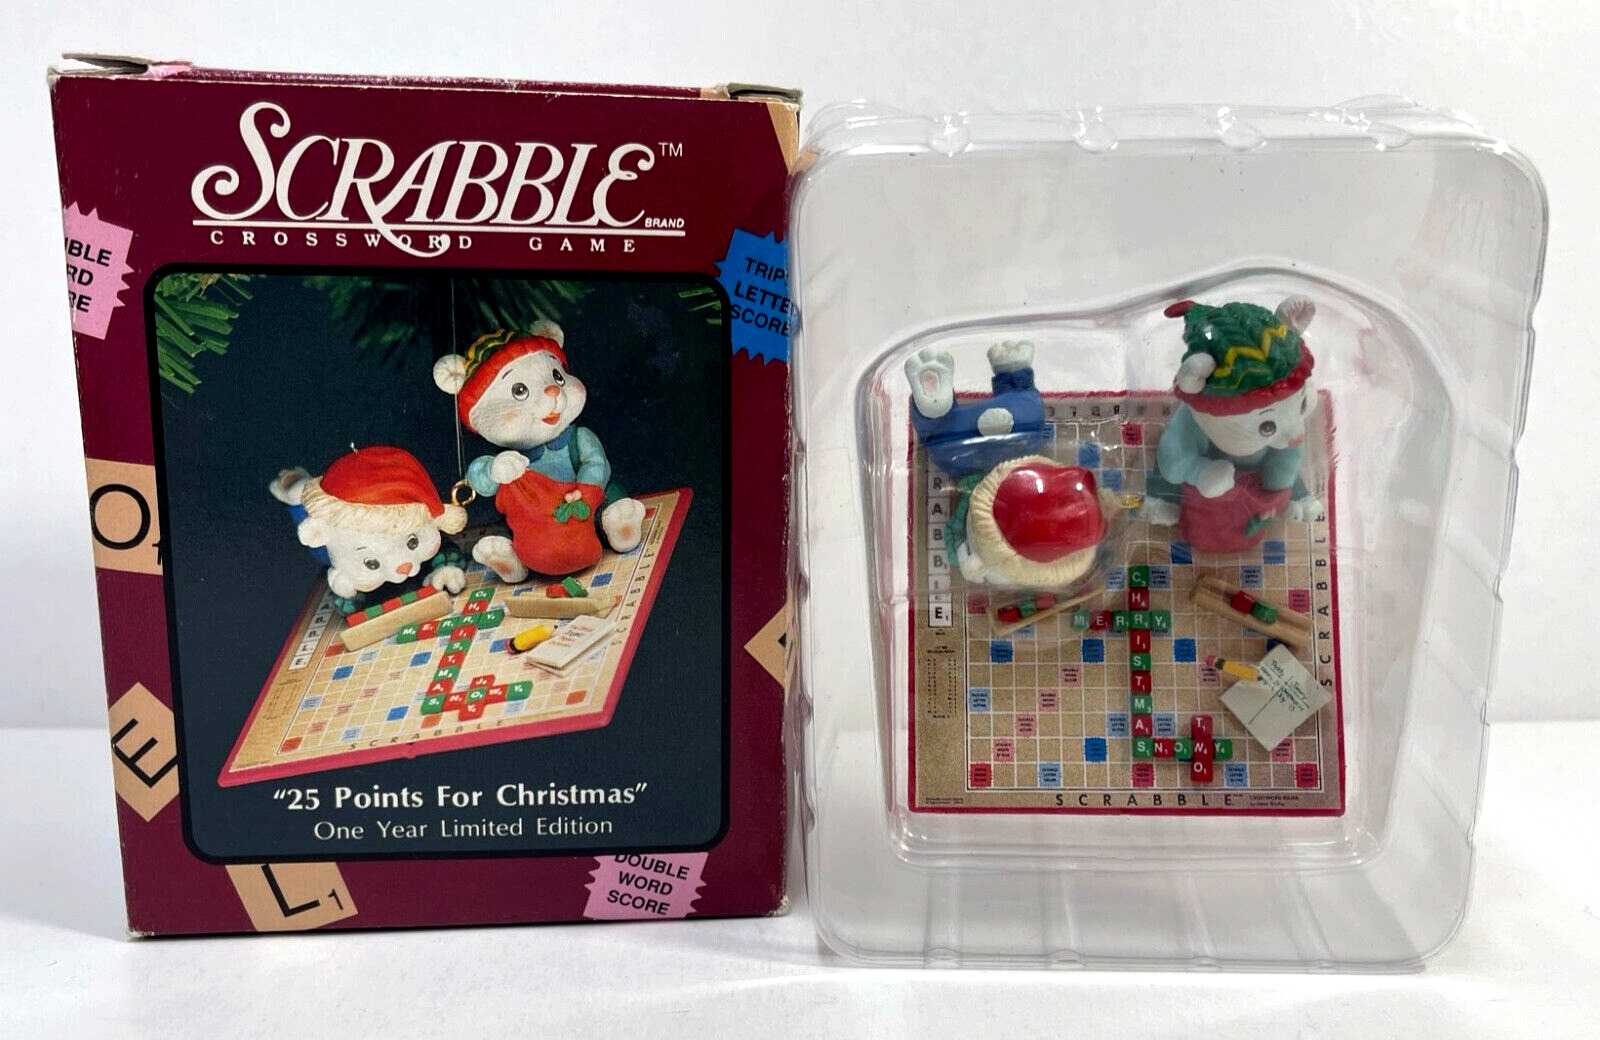 Scrabble Crossword Game 1993 Enesco Ornament - 25 Points For Christmas - 1yr Ed.